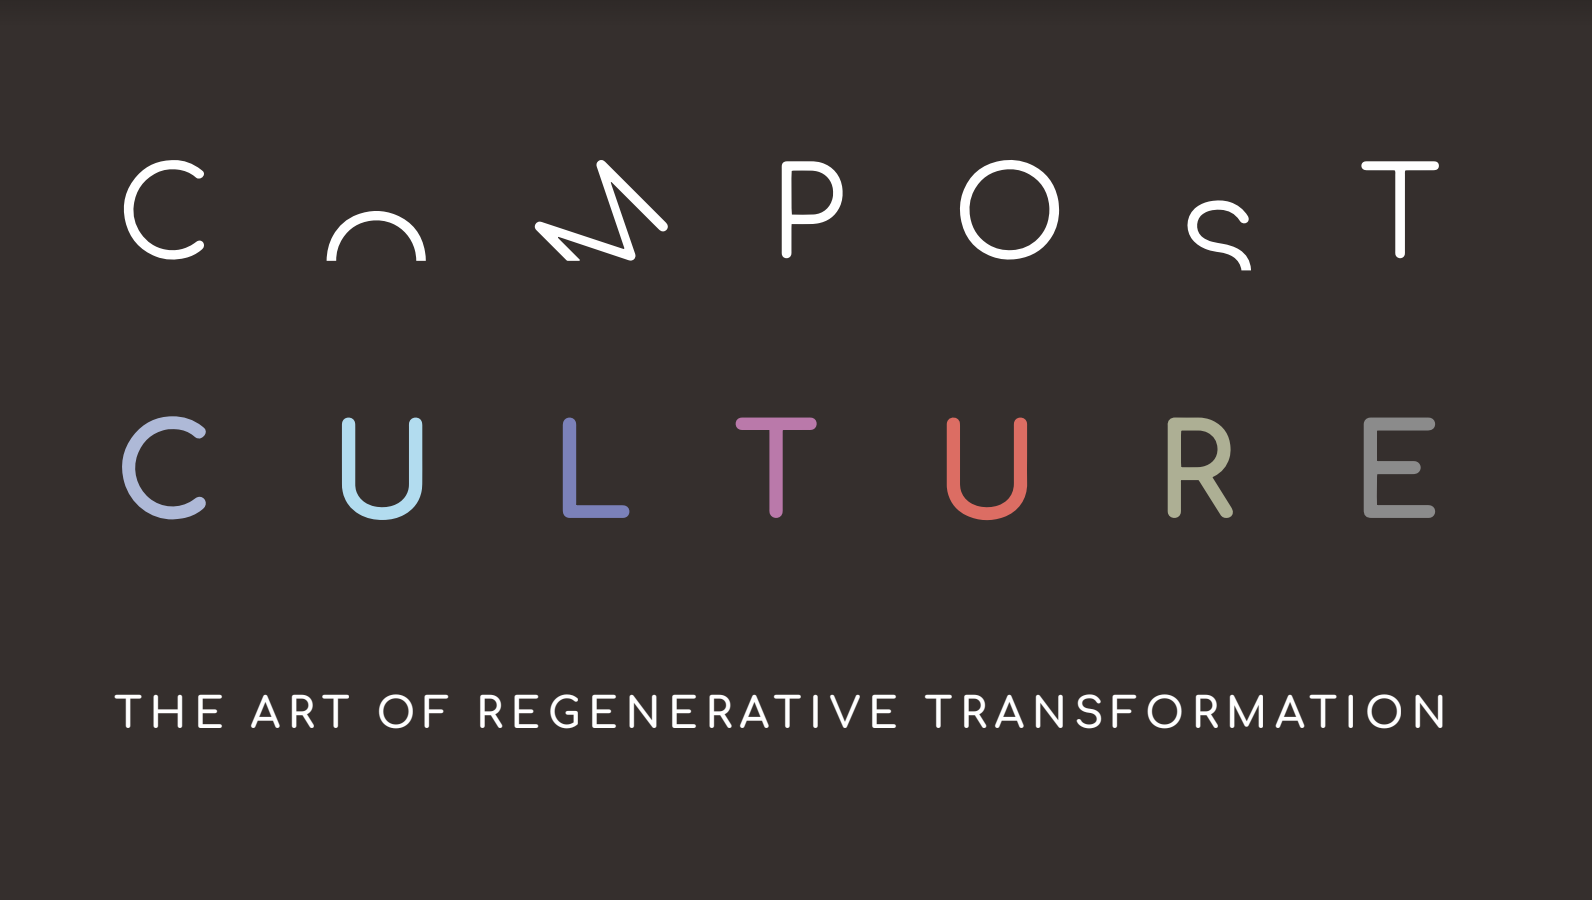 Exhibit: Compost Culture: The Art of Regenerative Transformation